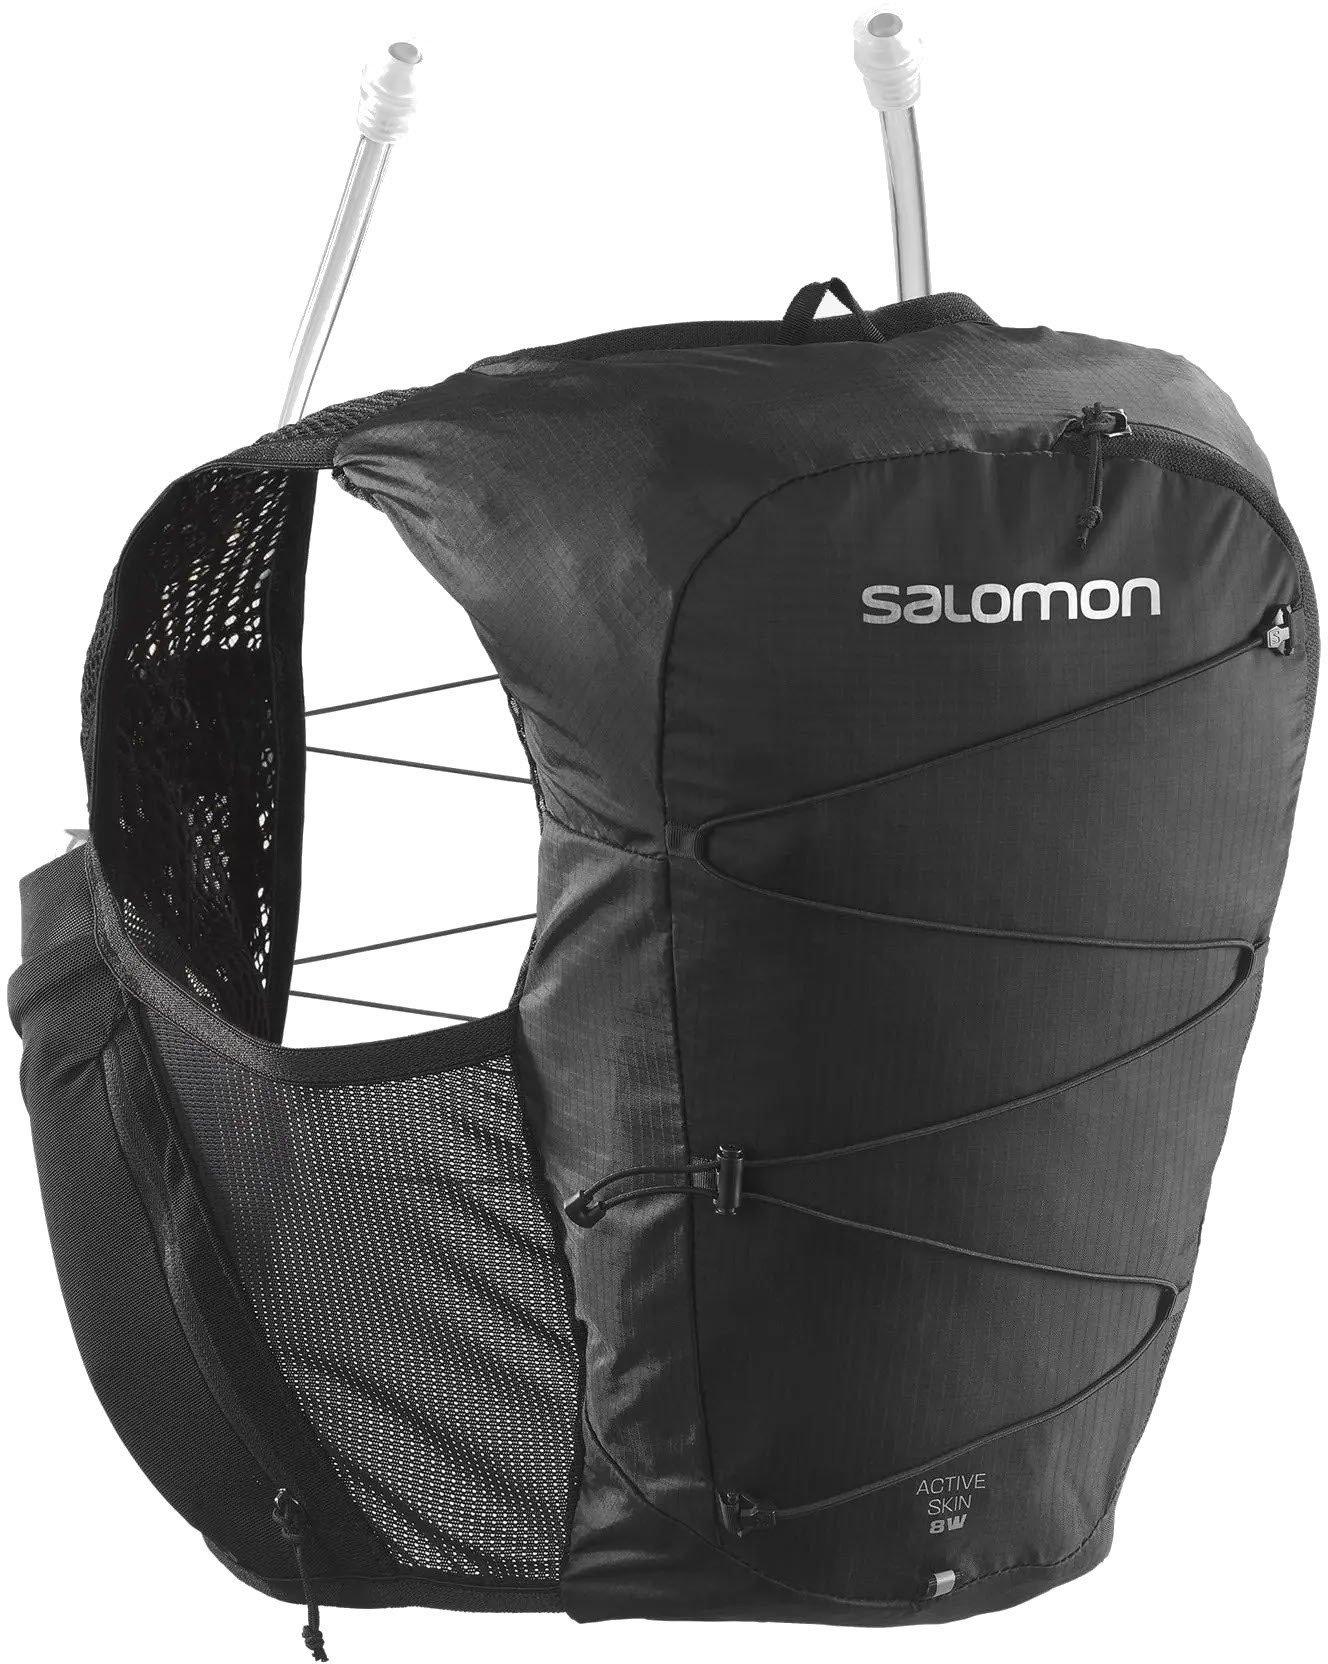 Salomon Active Skin 8 S